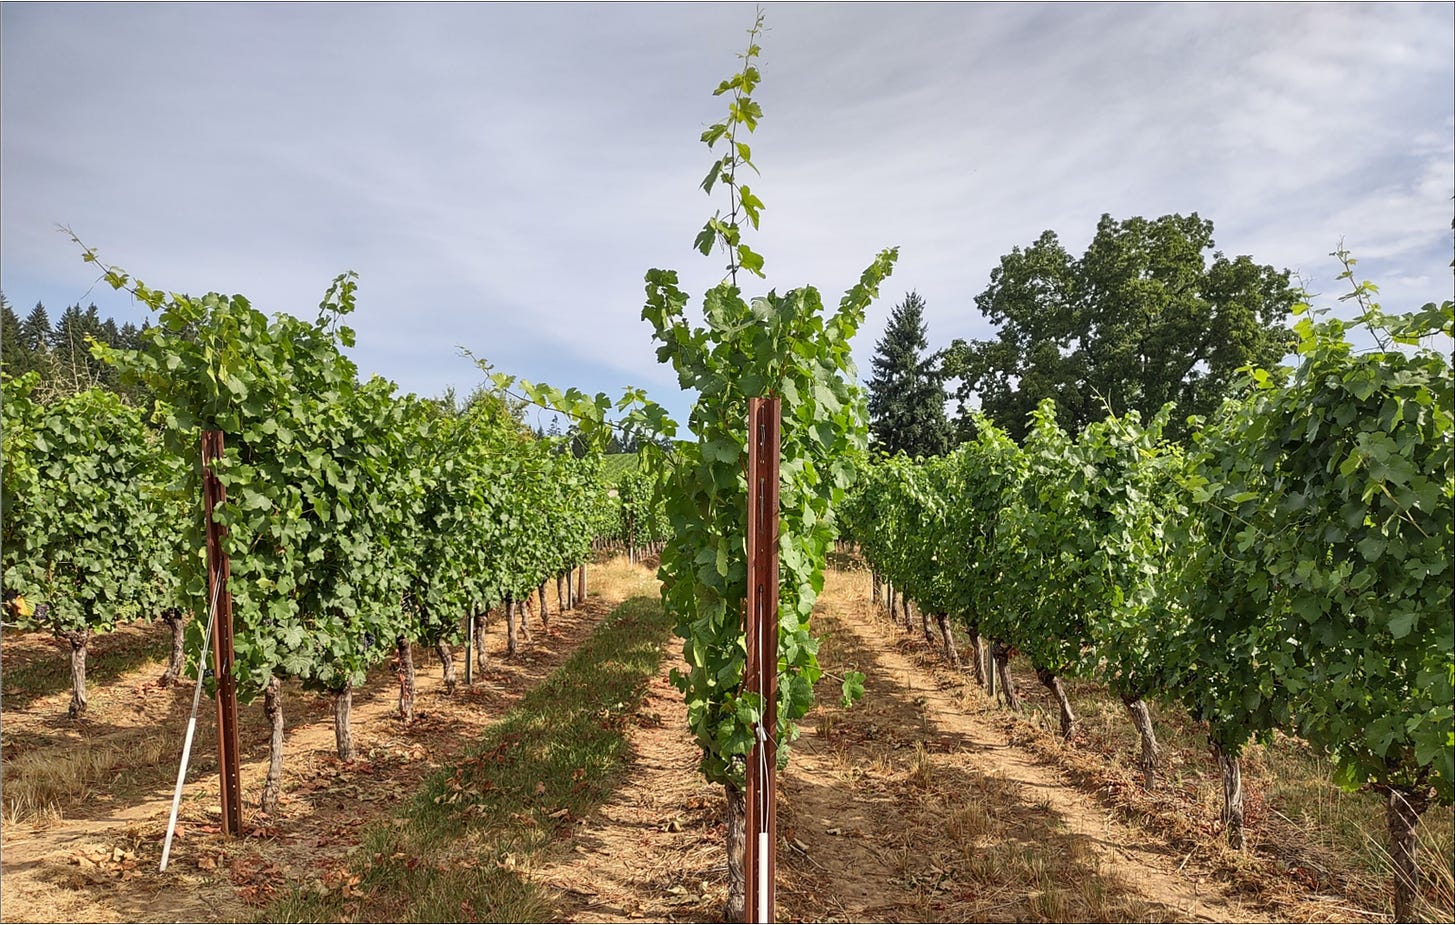 Pinot Noir vines in a Vertical Shoot Position (VSP) trellis.